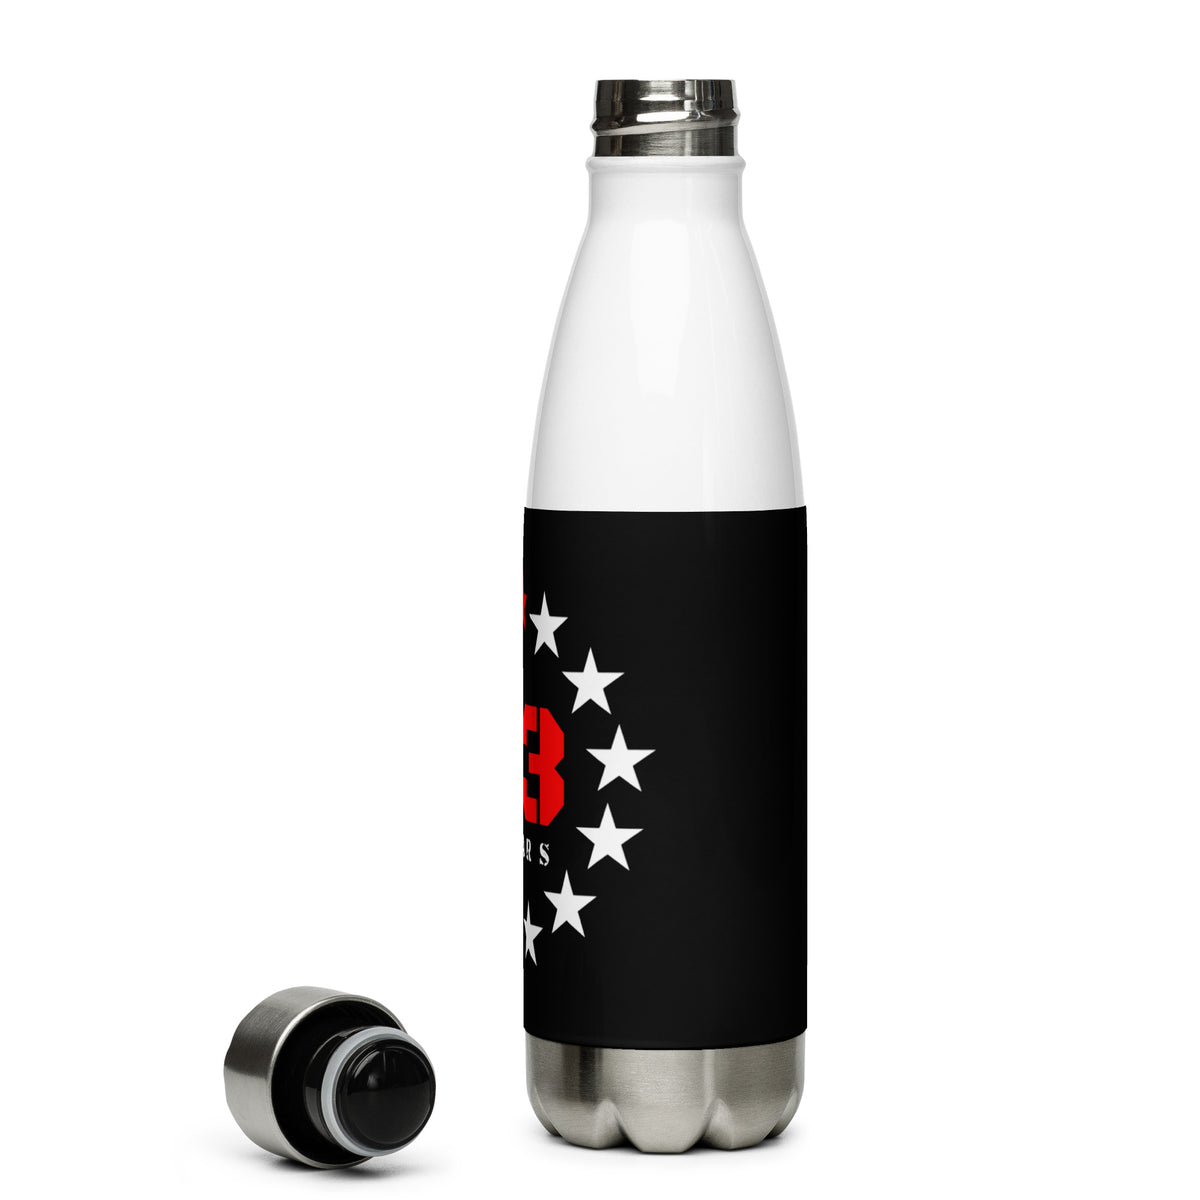 13 Stars Stainless Steel Water Bottle